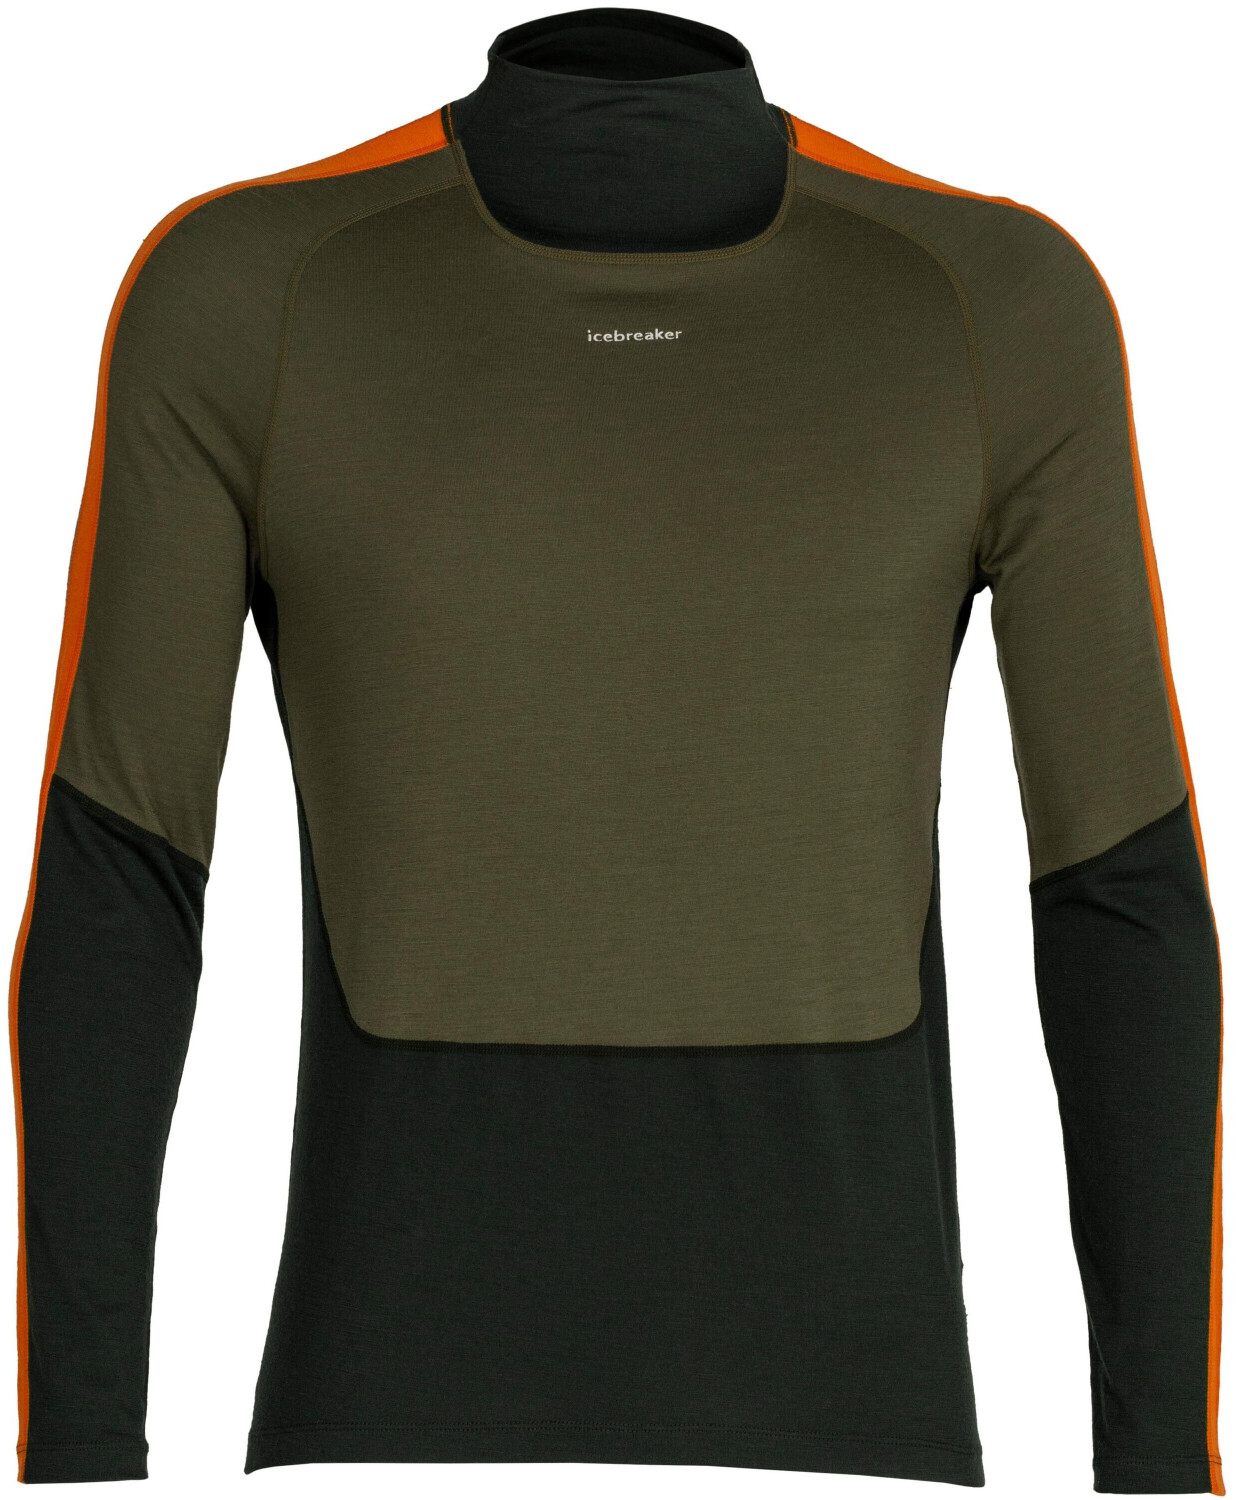 Buy Icebreaker Merino 200 Sonebula LS Shirt High Collar Men from £59.49  (Today) – Best Deals on